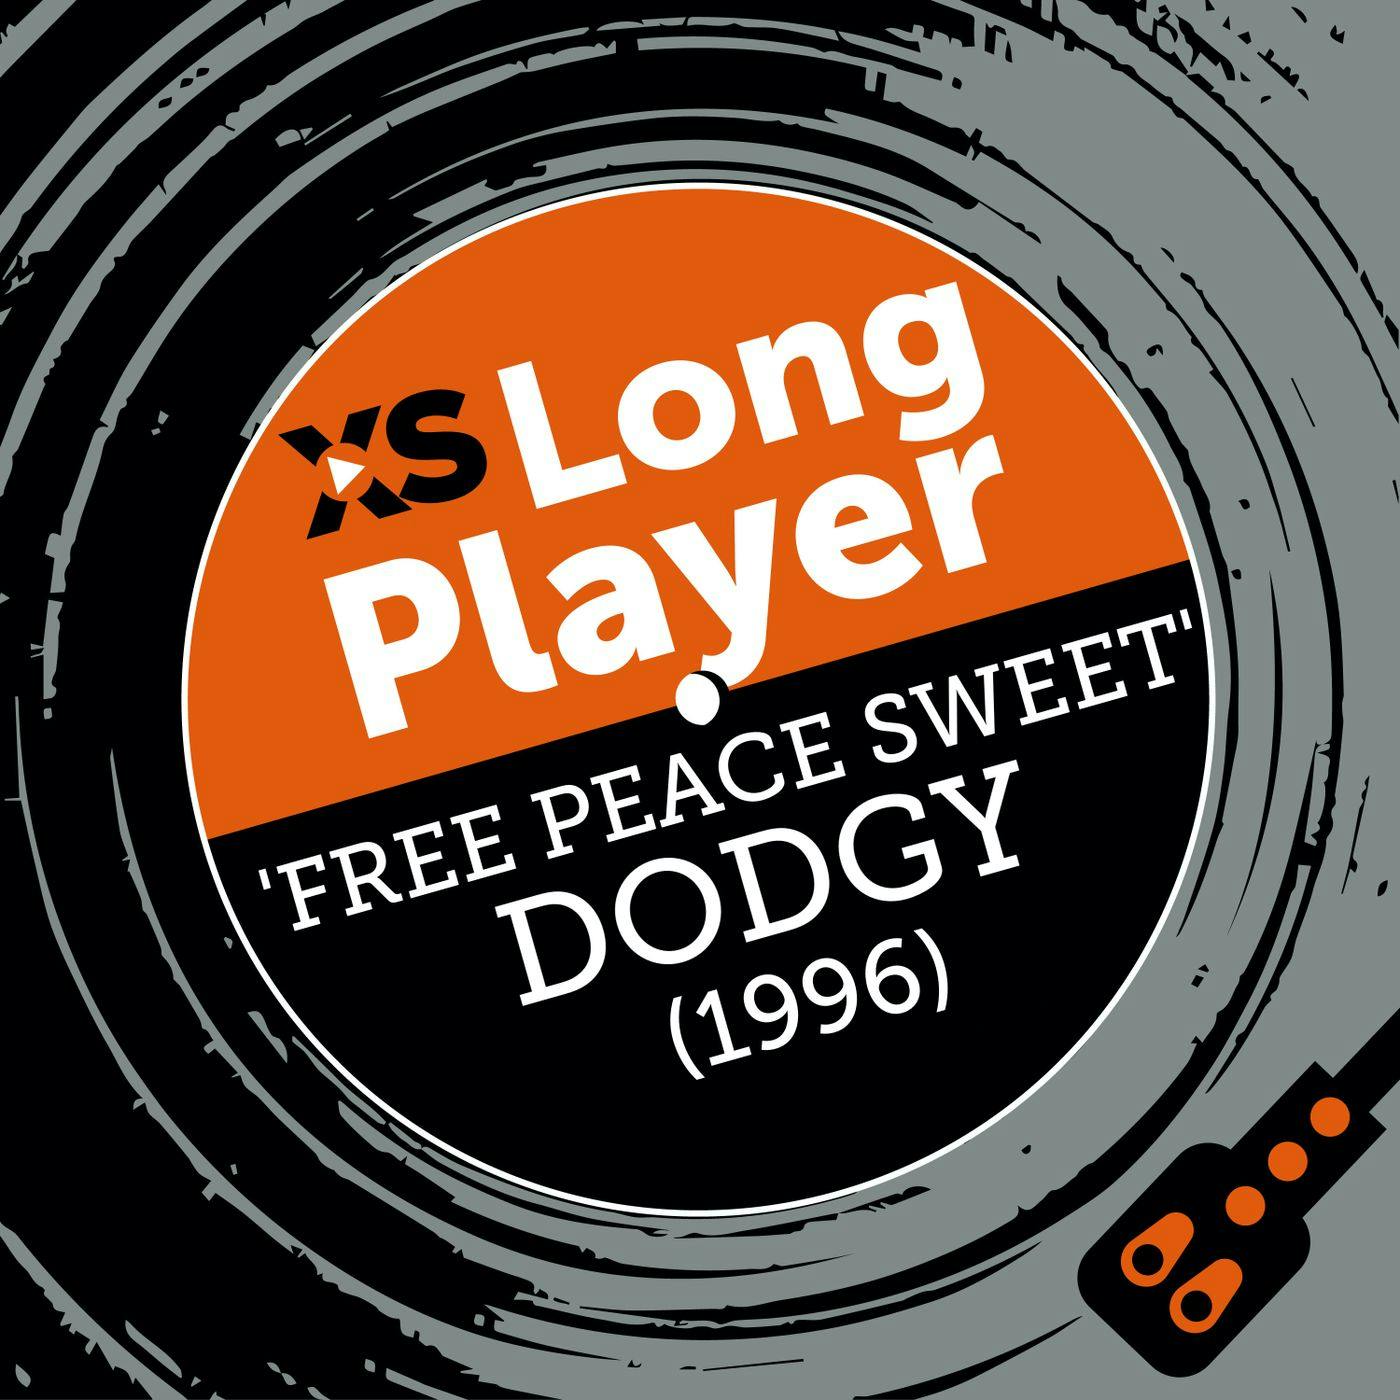 Dodgy ”Free Peace Sweet” with Nigel Clark